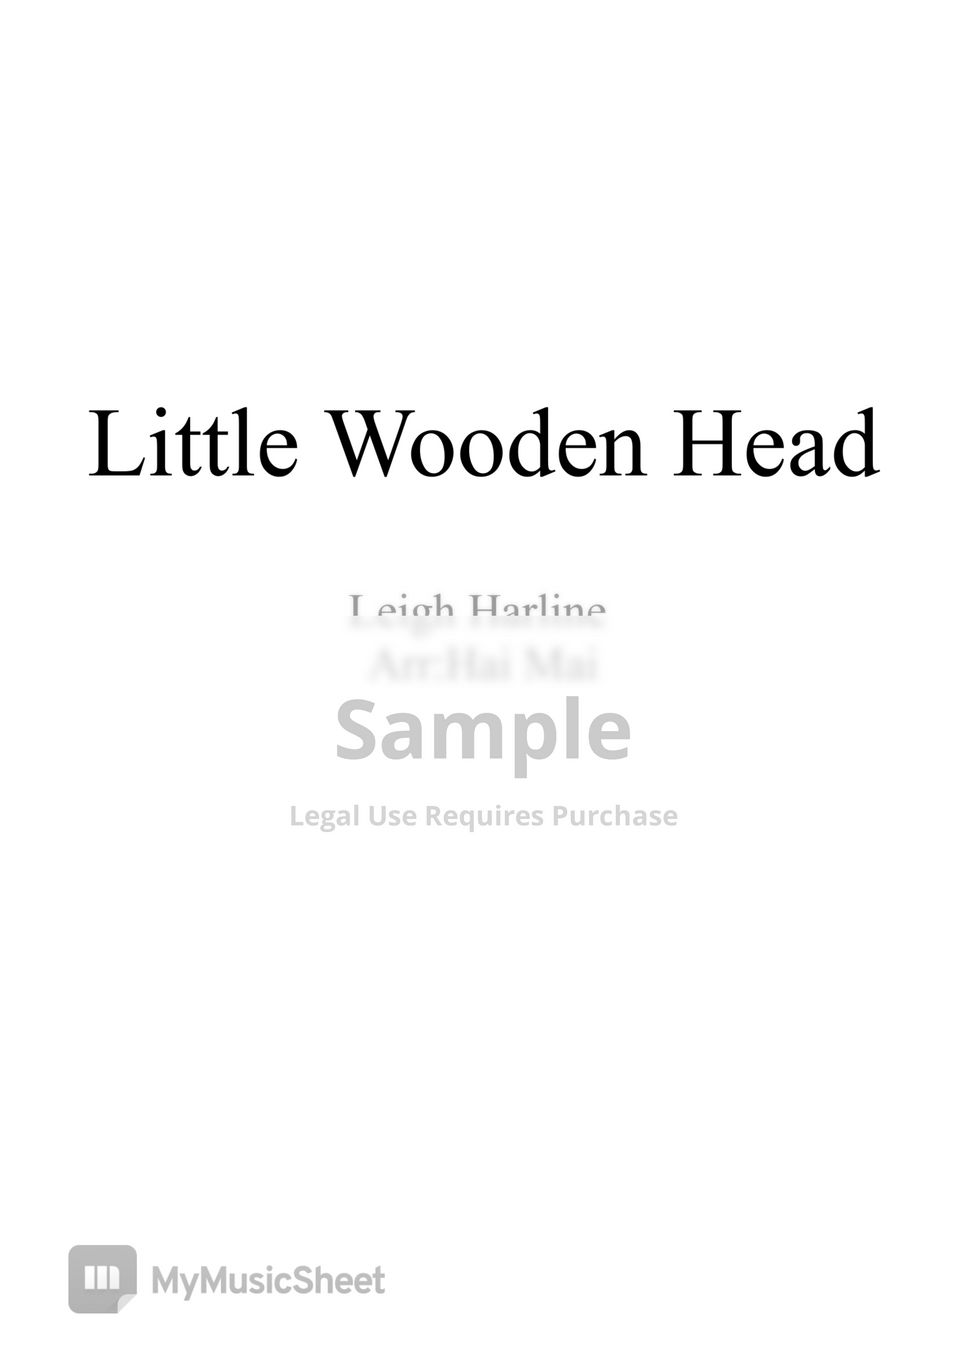 Leigh Harline - Little Wooden Head by Hai Mai